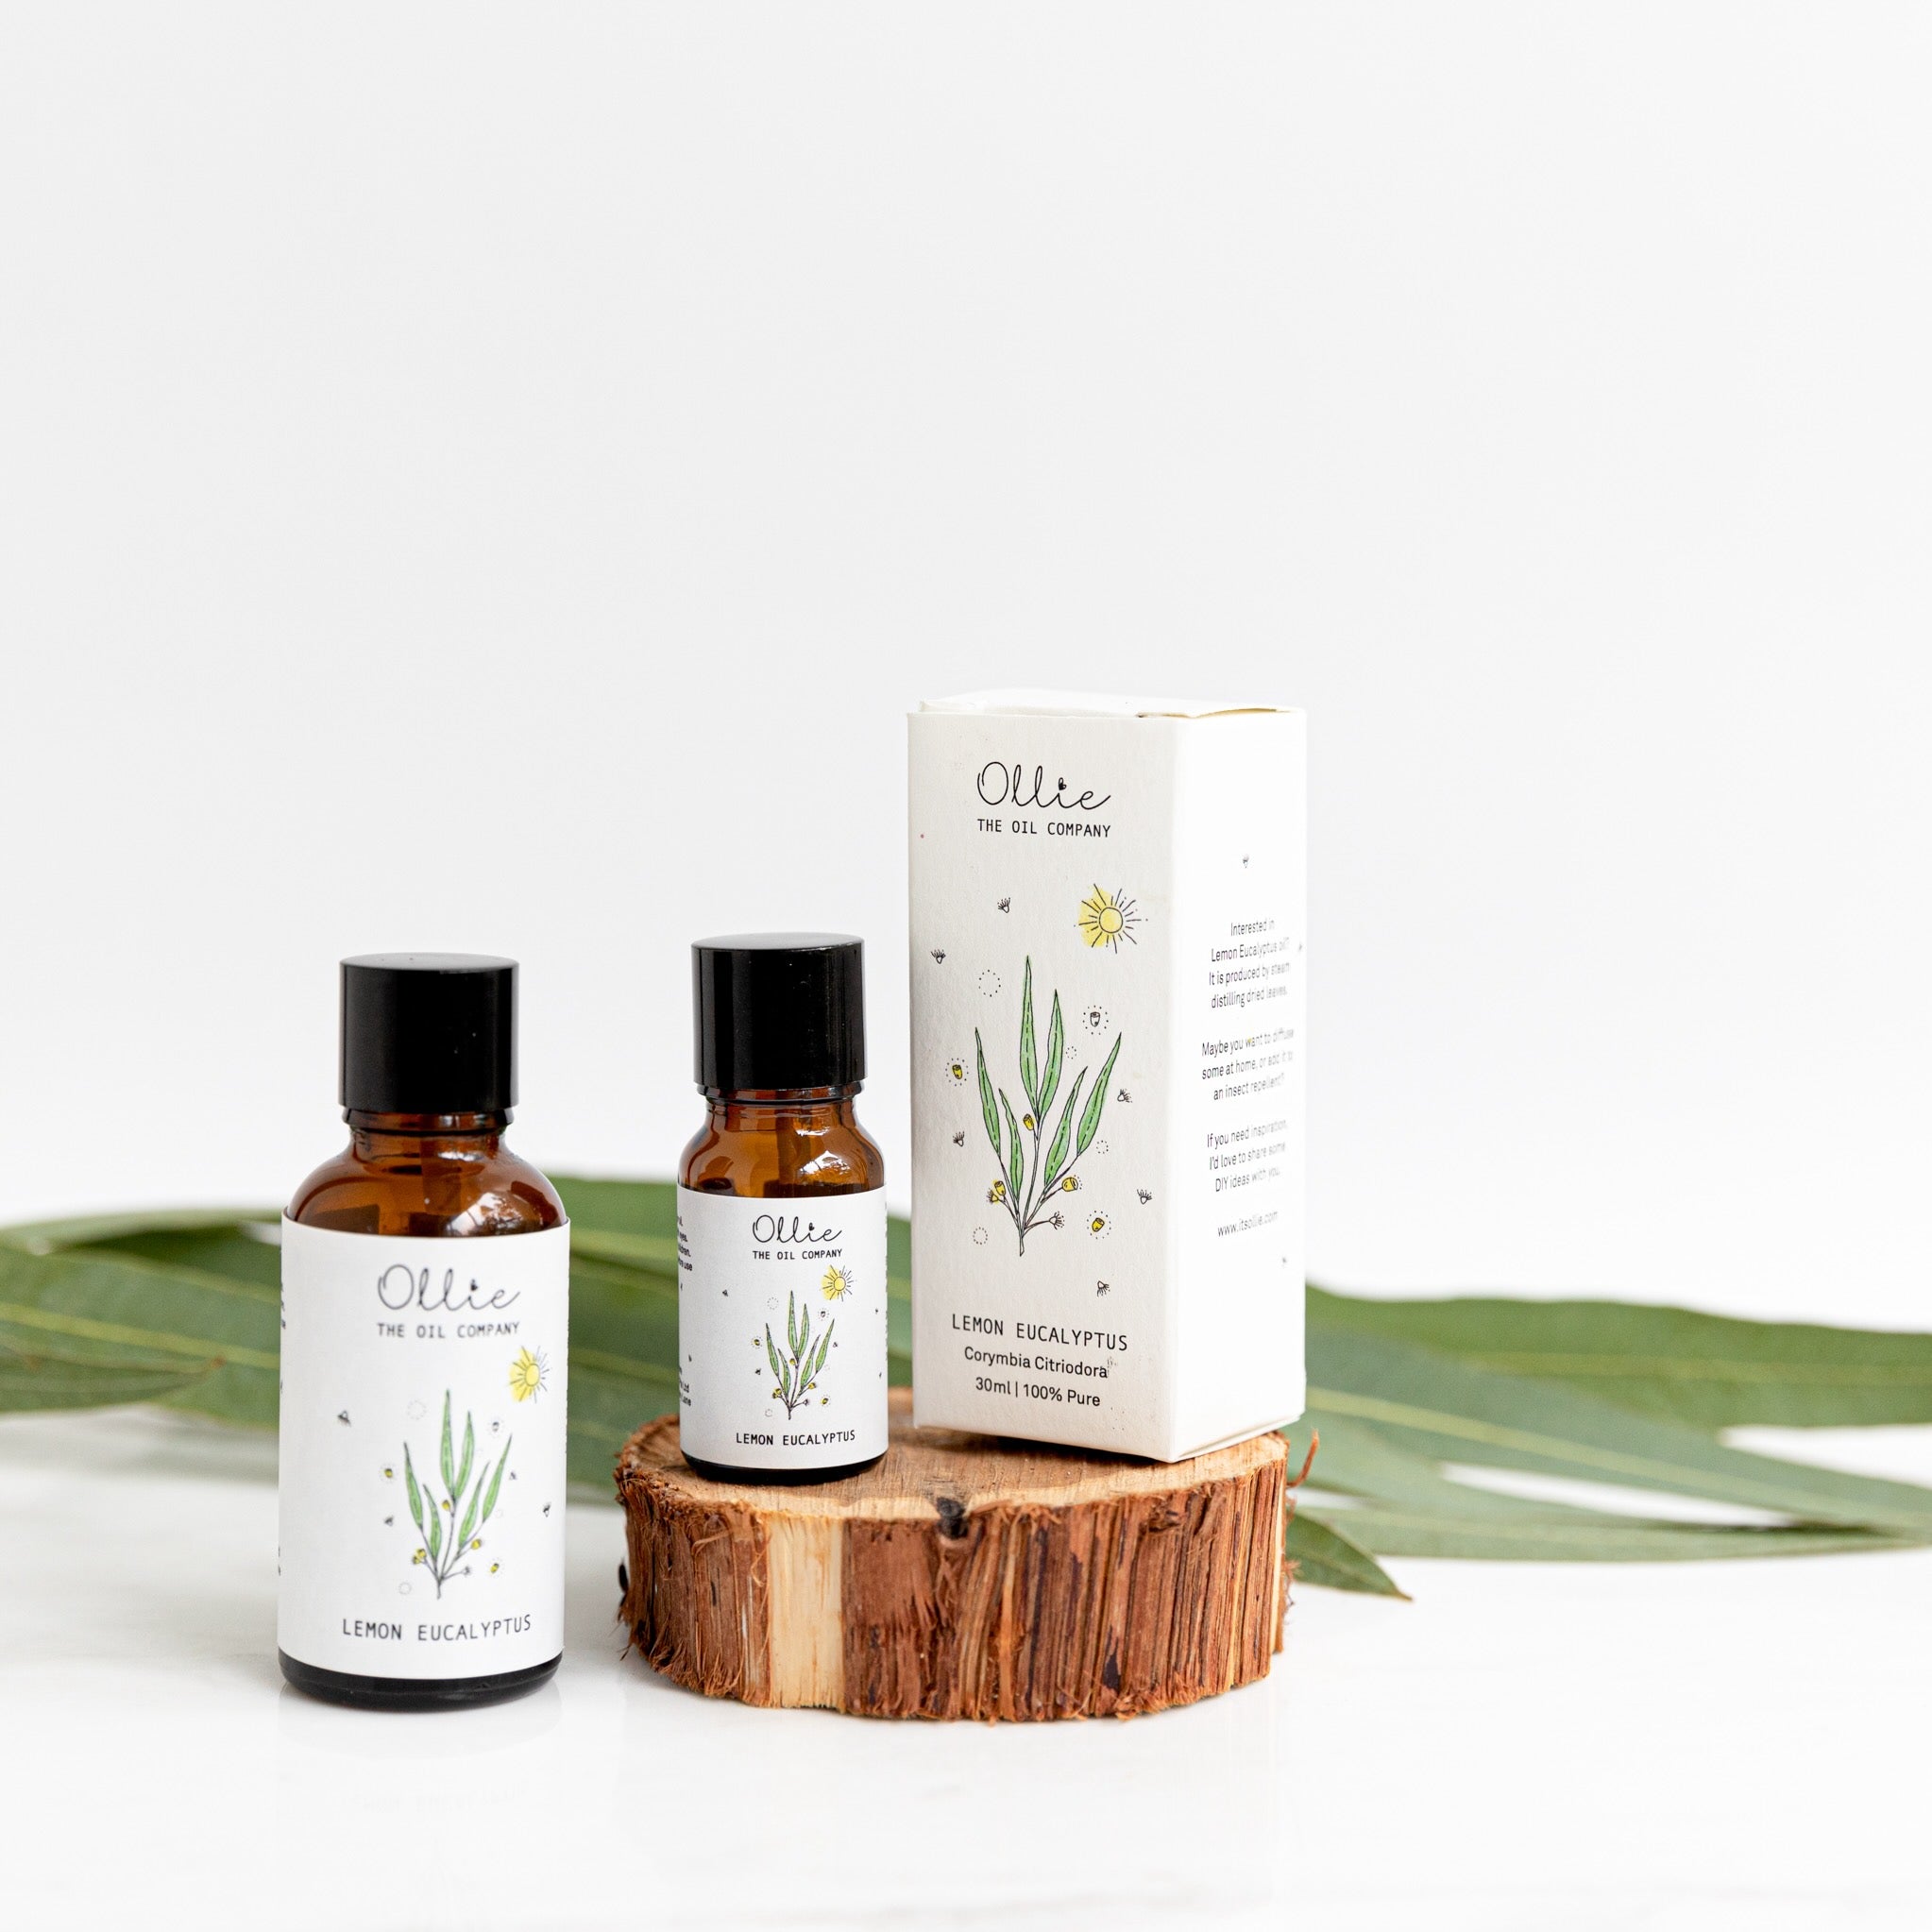 Ollie Lemon Eucalyptus Oil | Home fragrances | The Green Collective SG